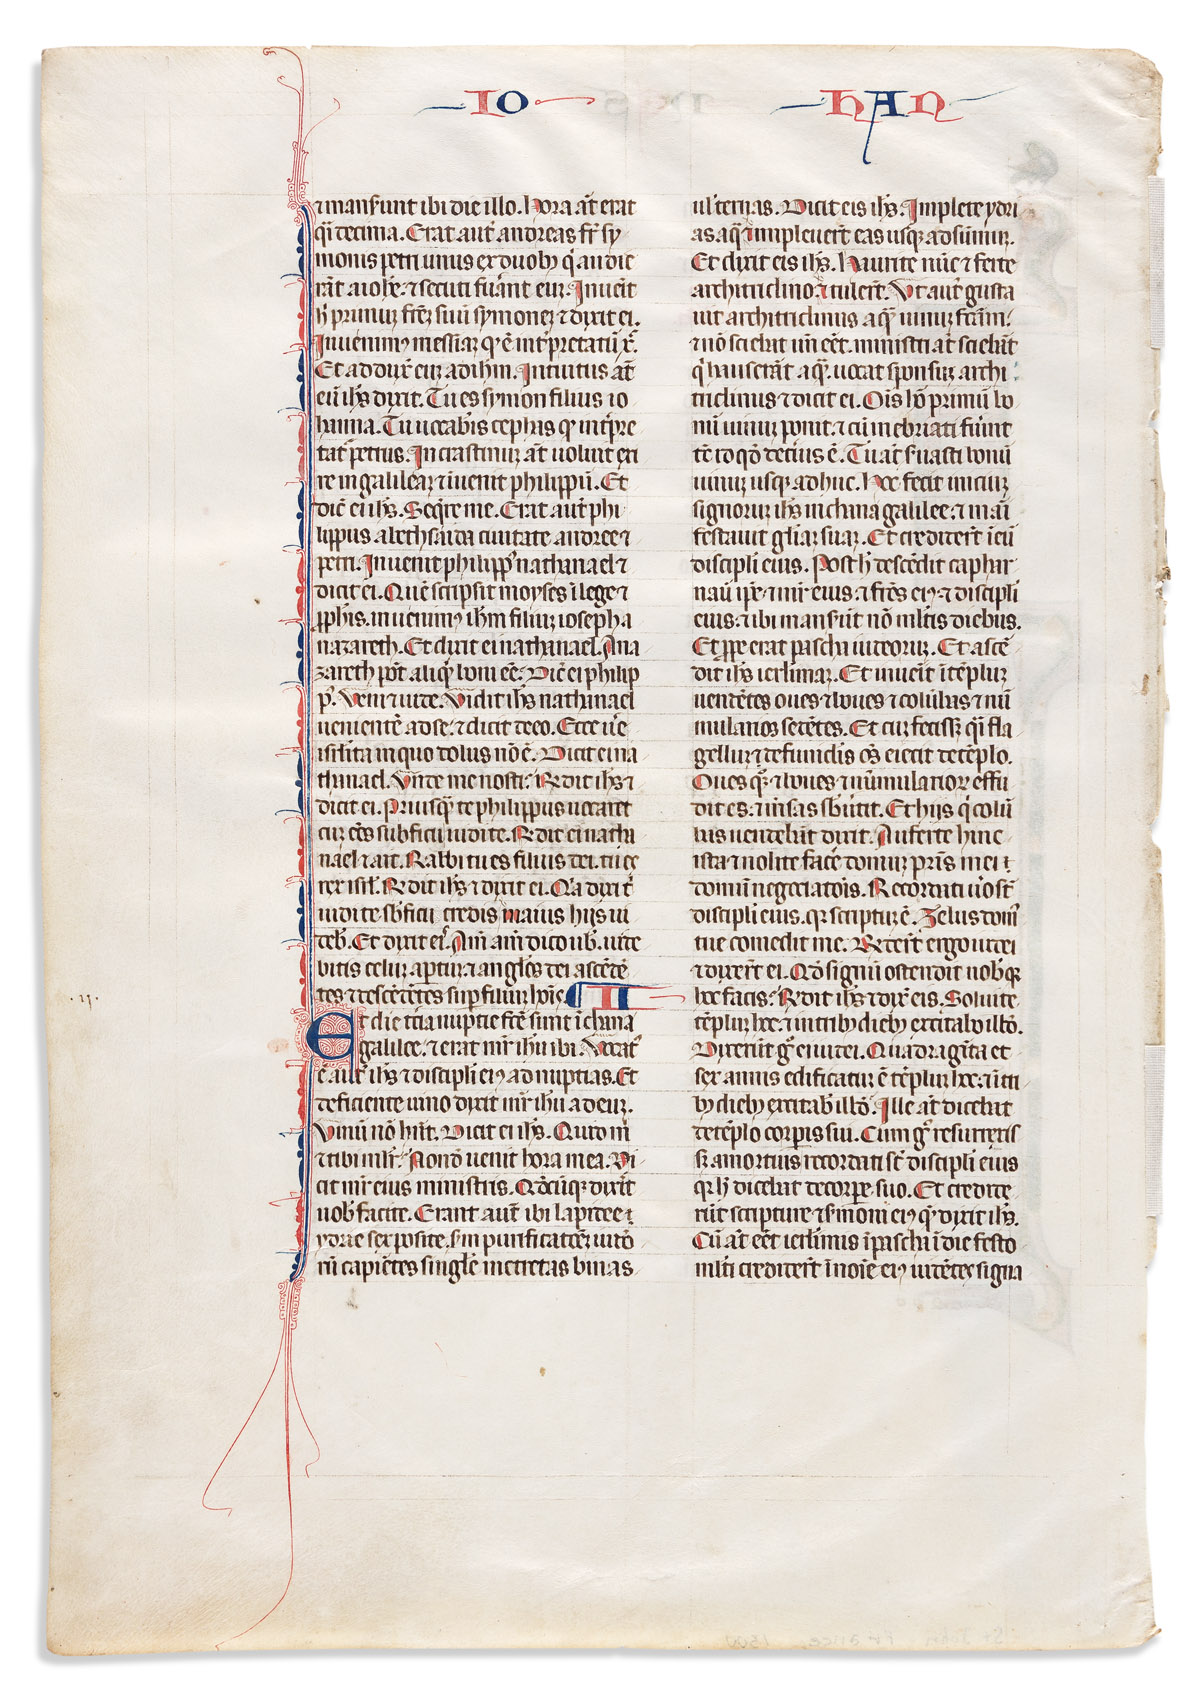 Medieval Manuscript Leaf. Gospel of John Incipit with Illumination.